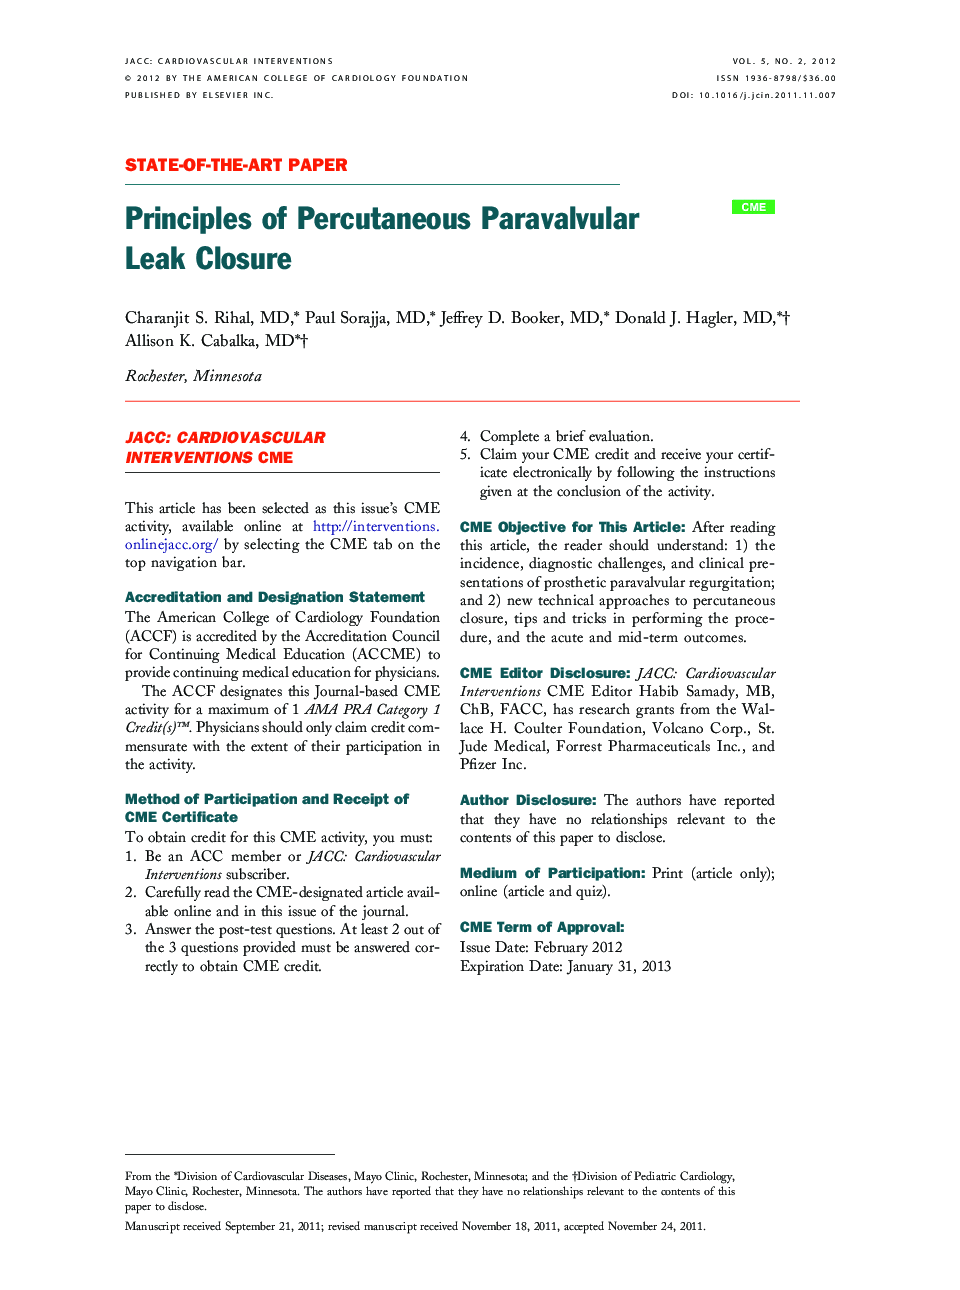 Principles of Percutaneous Paravalvular Leak Closure 